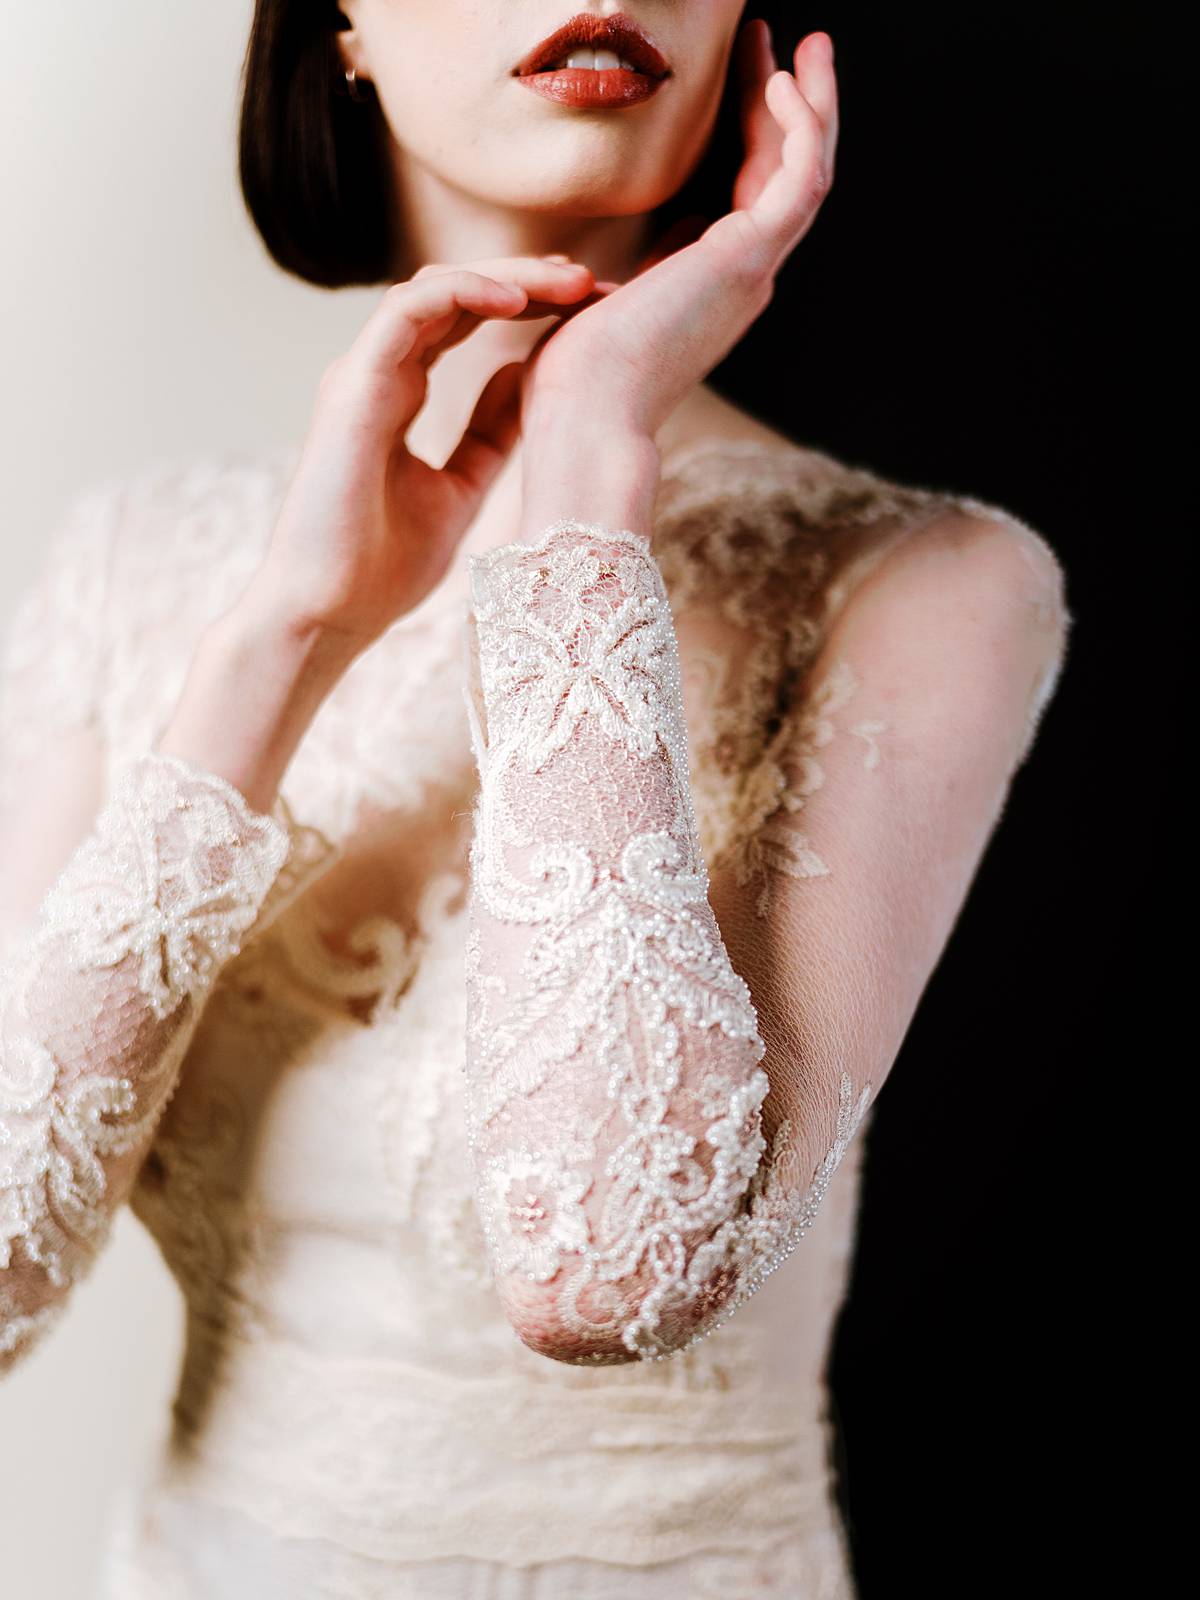 studio bridal portrait in charleston sc by wedding photographer brian d smith with claire pettibone dress